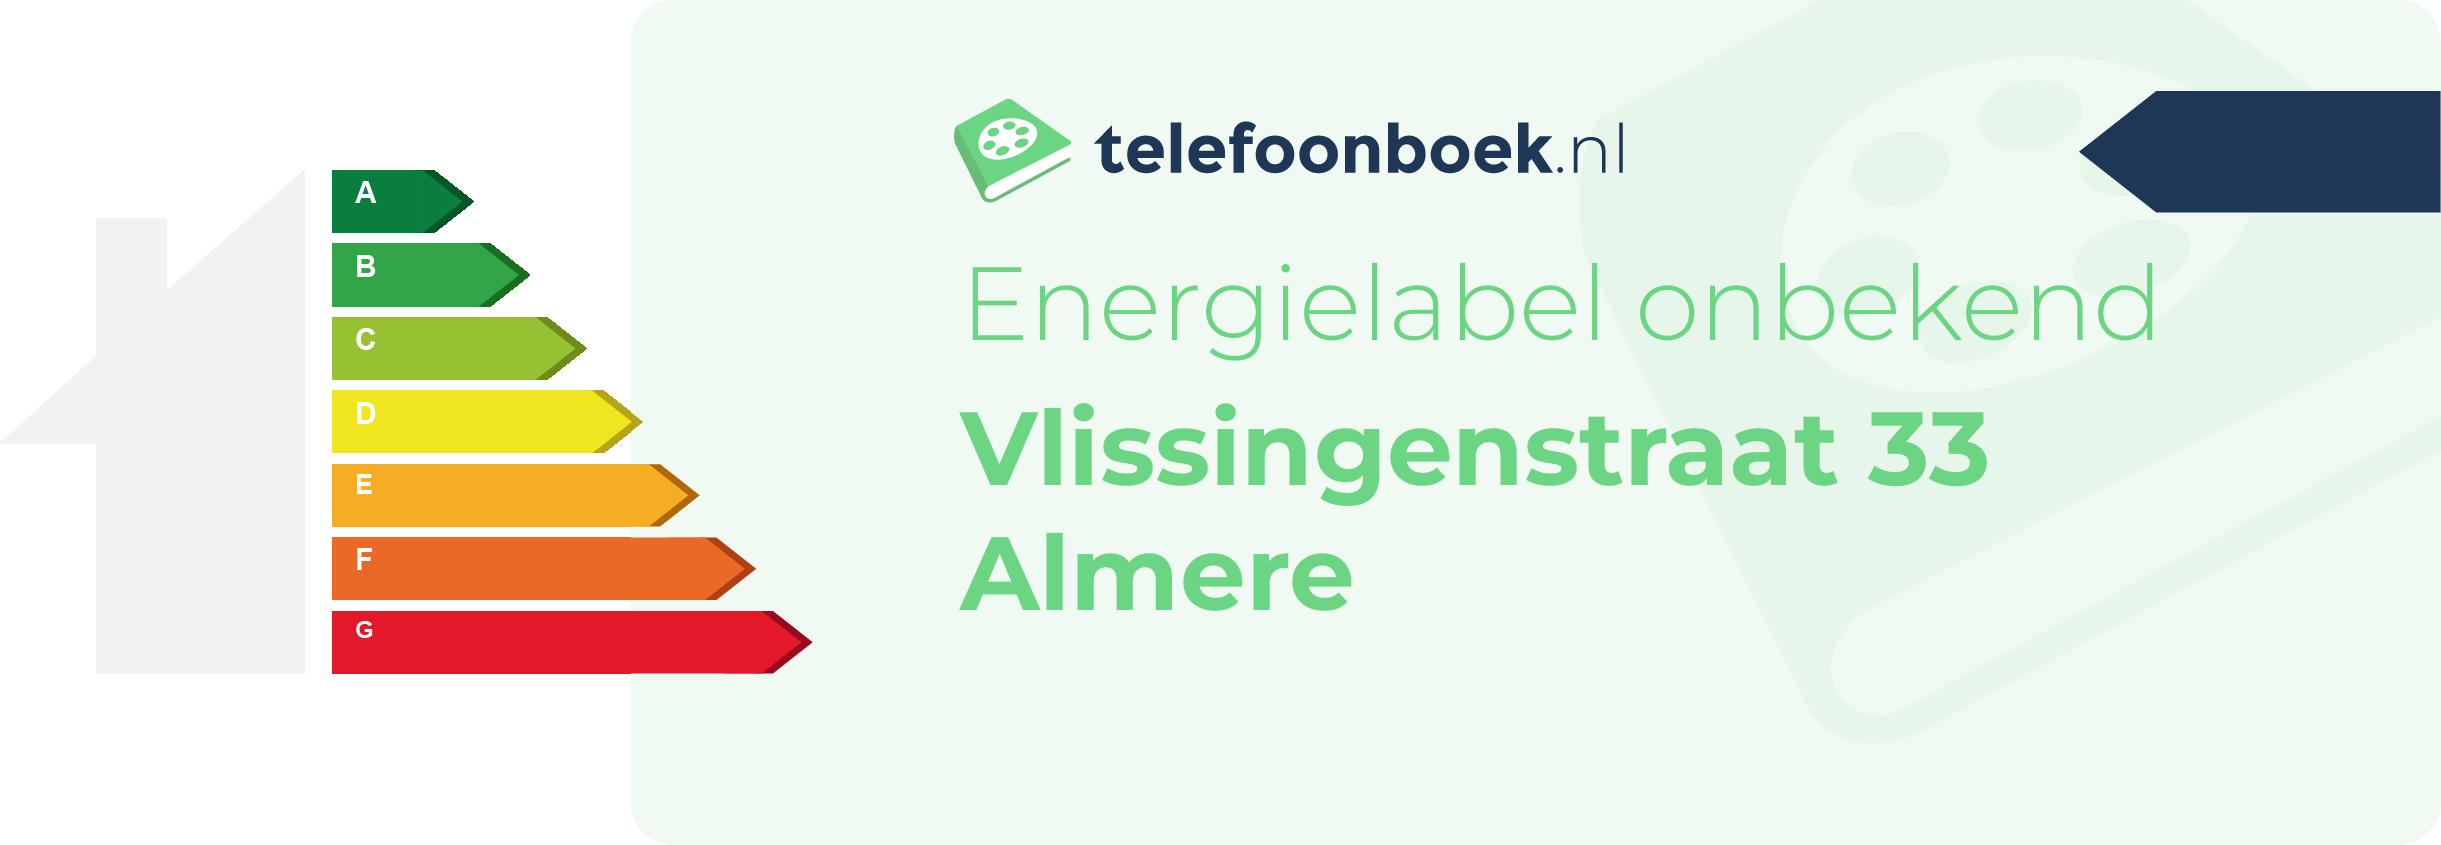 Energielabel Vlissingenstraat 33 Almere